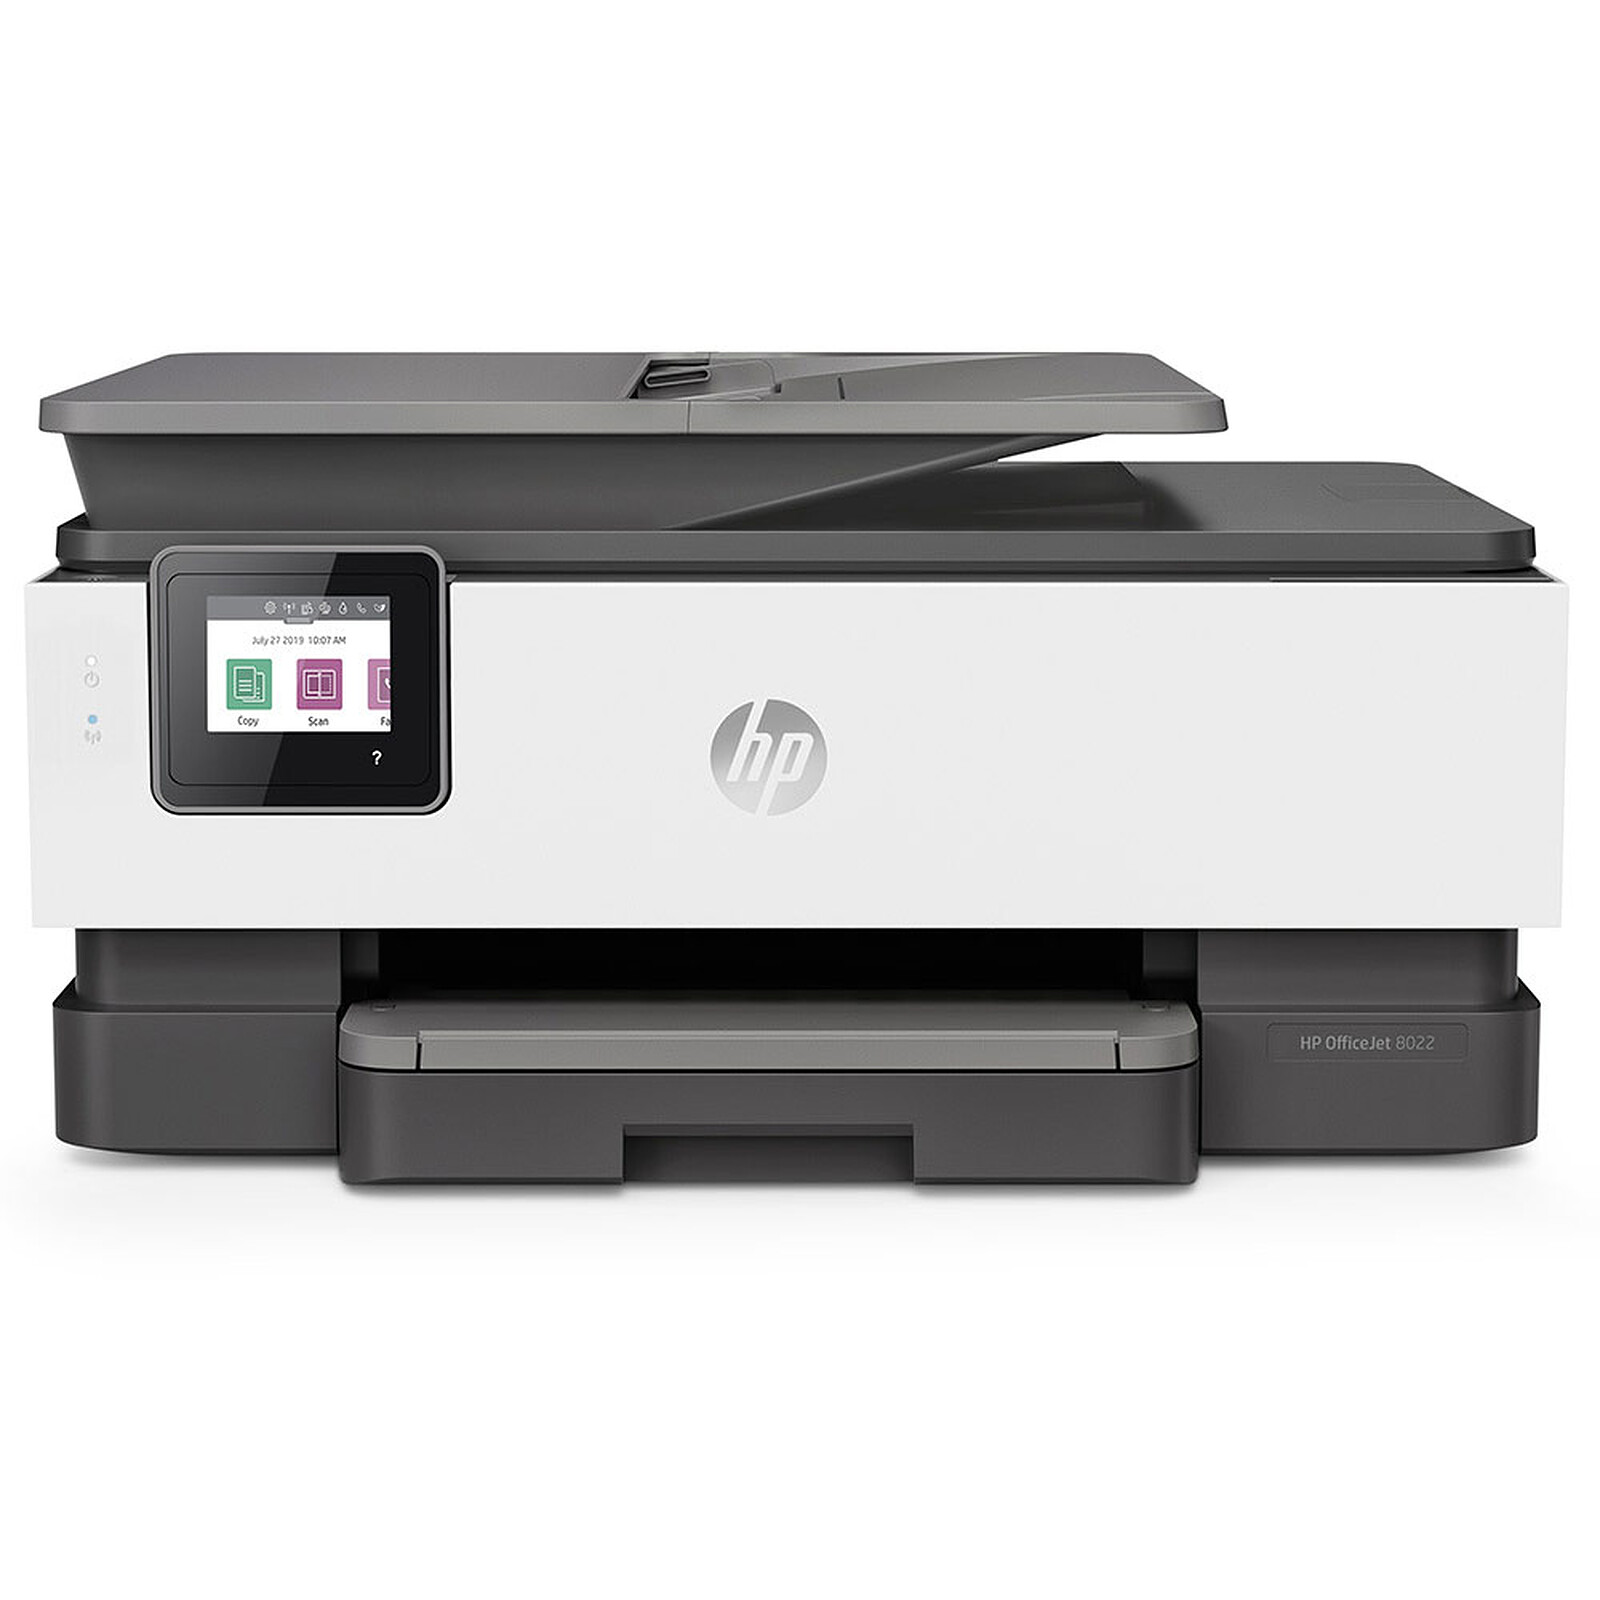 HP OfficeJet Pro 8022 - All-in-one printer - LDLC 3-year warranty